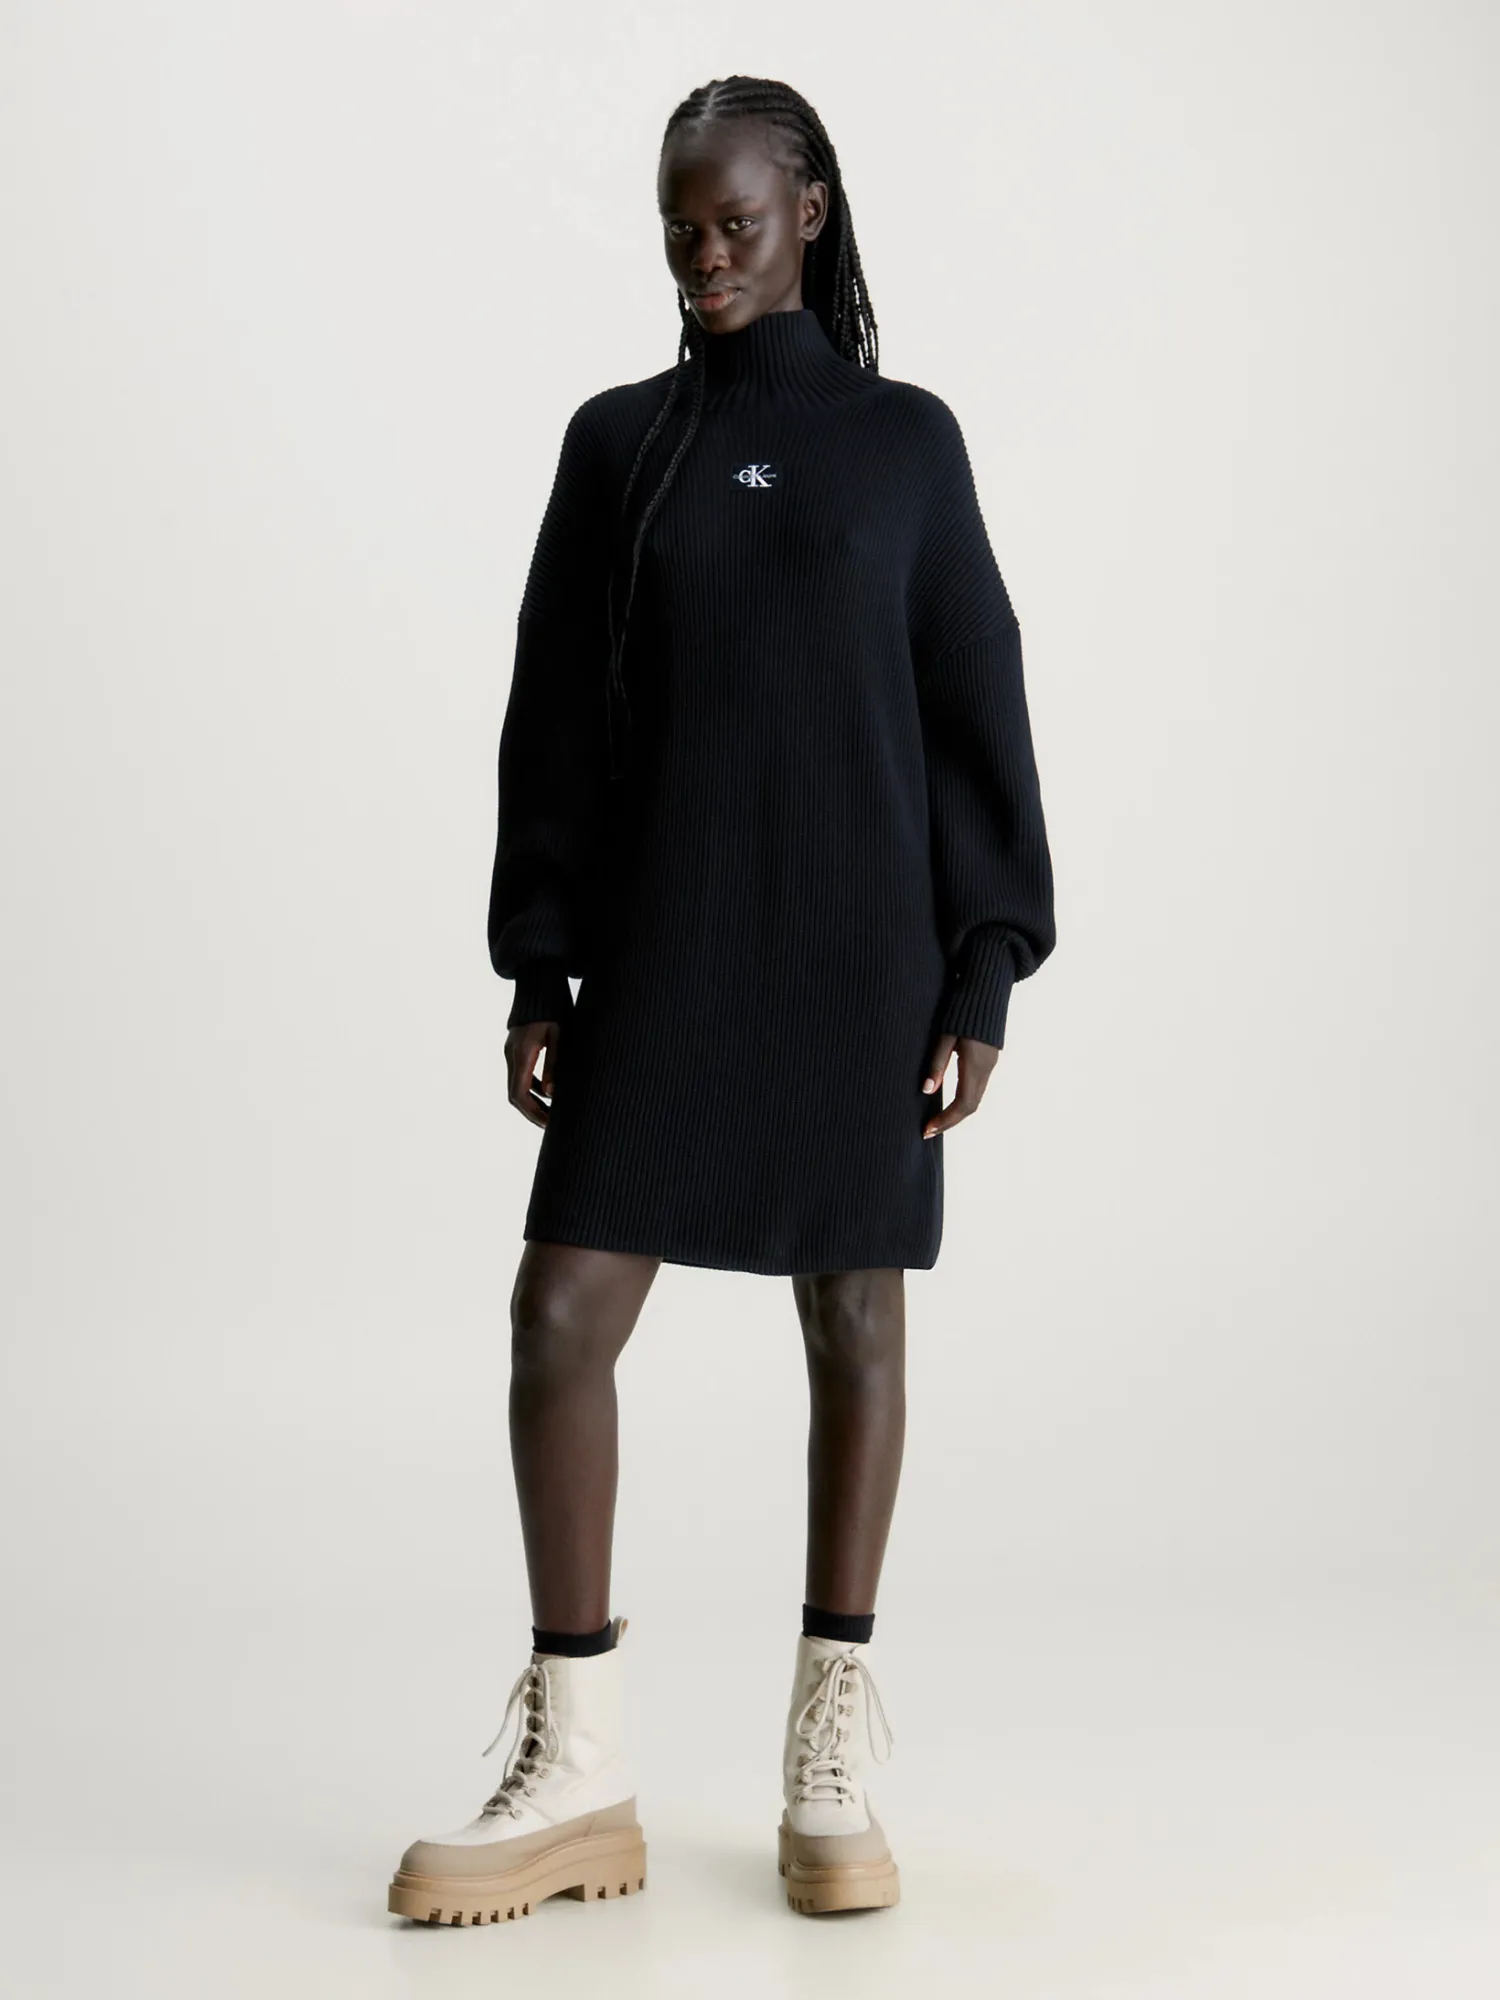 CALVIN KLEIN JEANS | CK Loose Choice+Attitude Black Sweater Woven Label - Dress